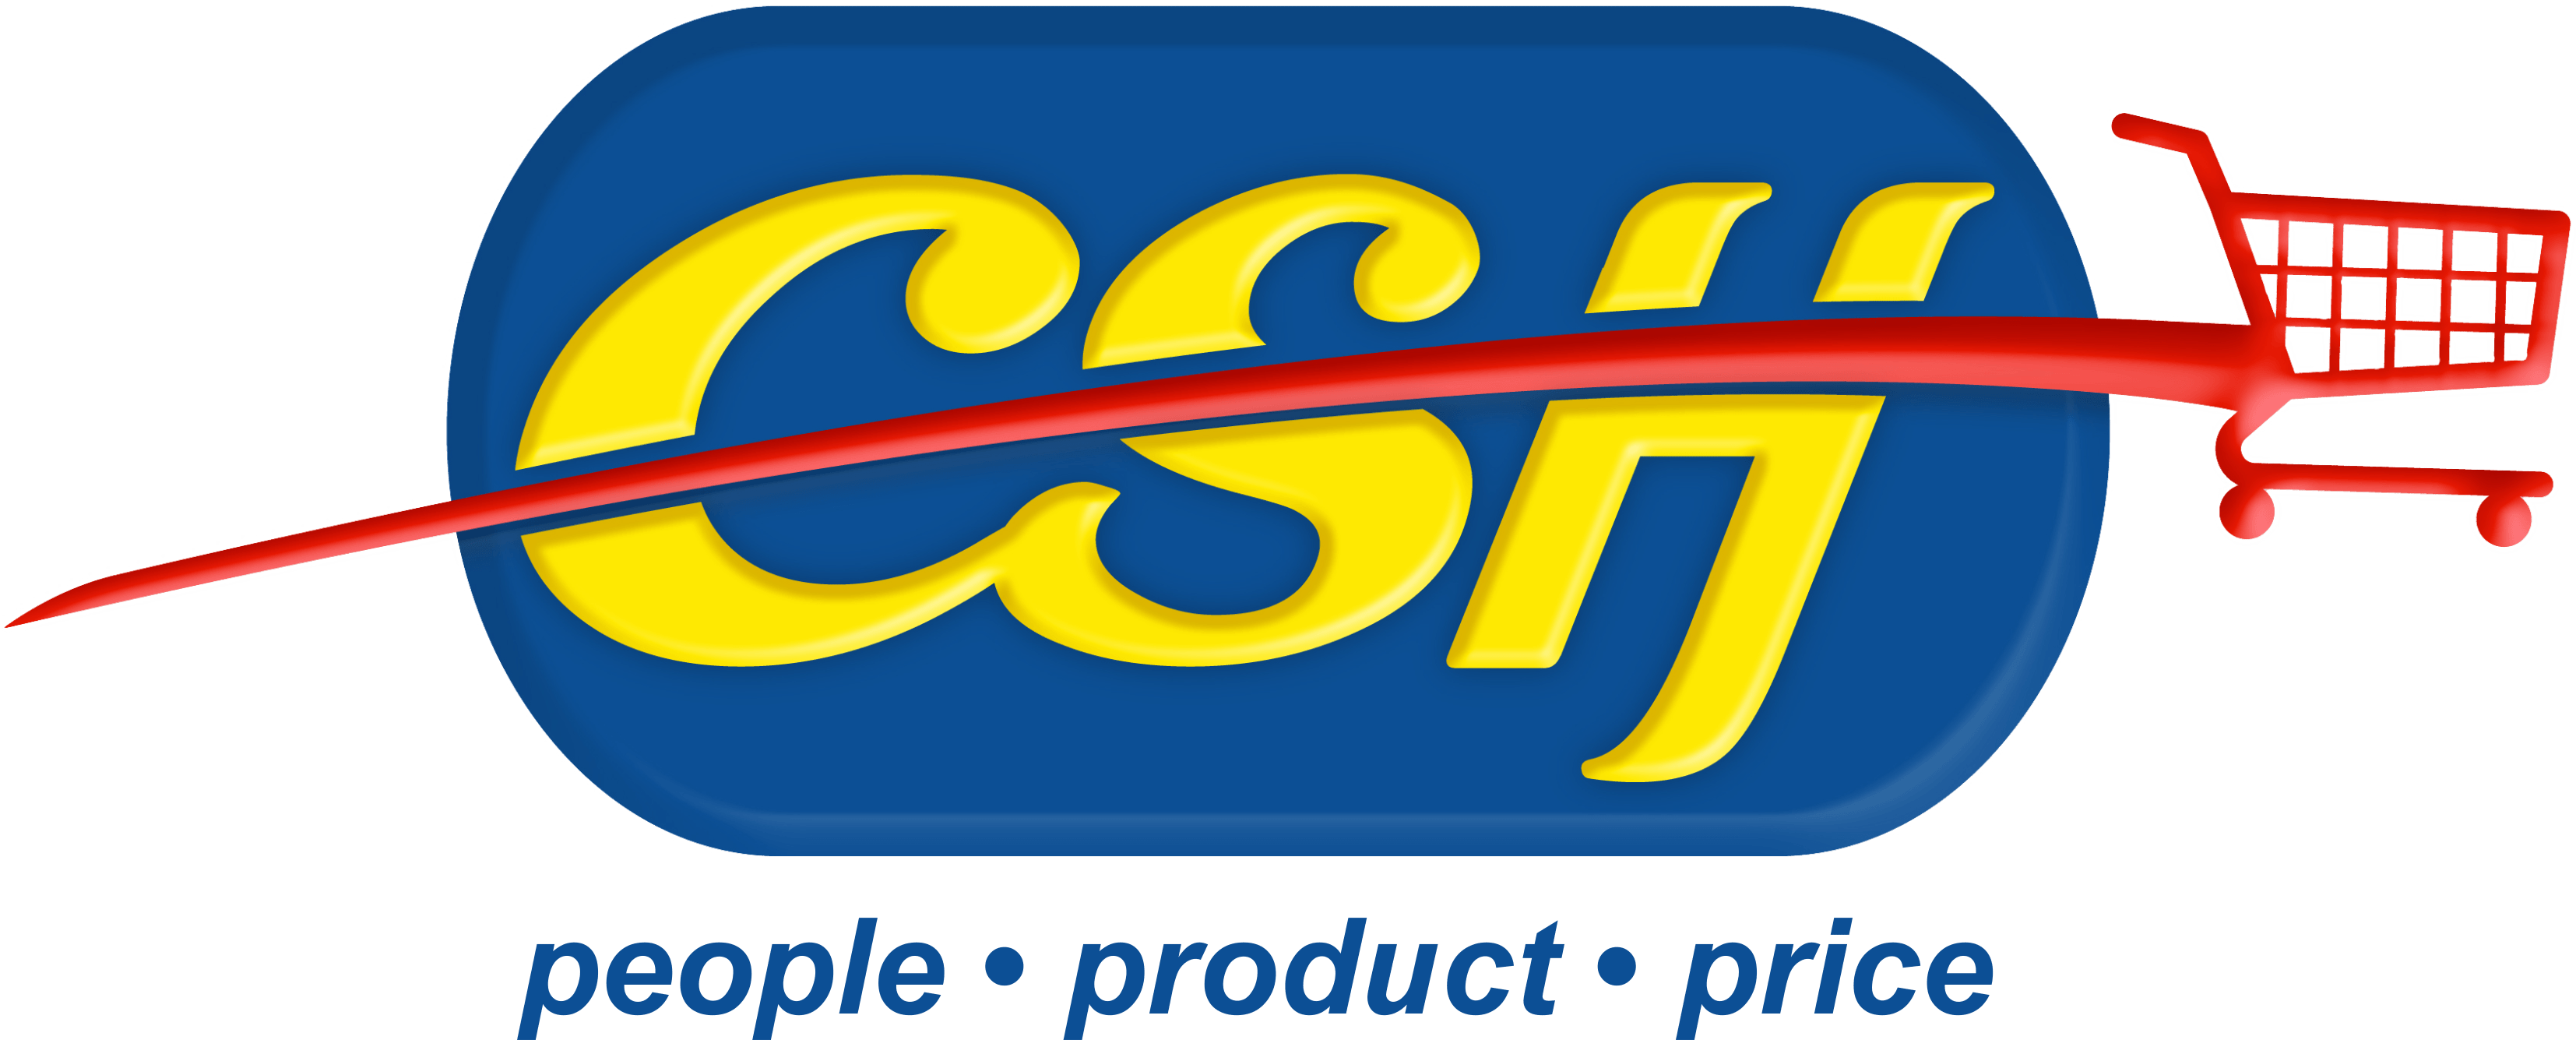 CSH Logo - CSH LOGO